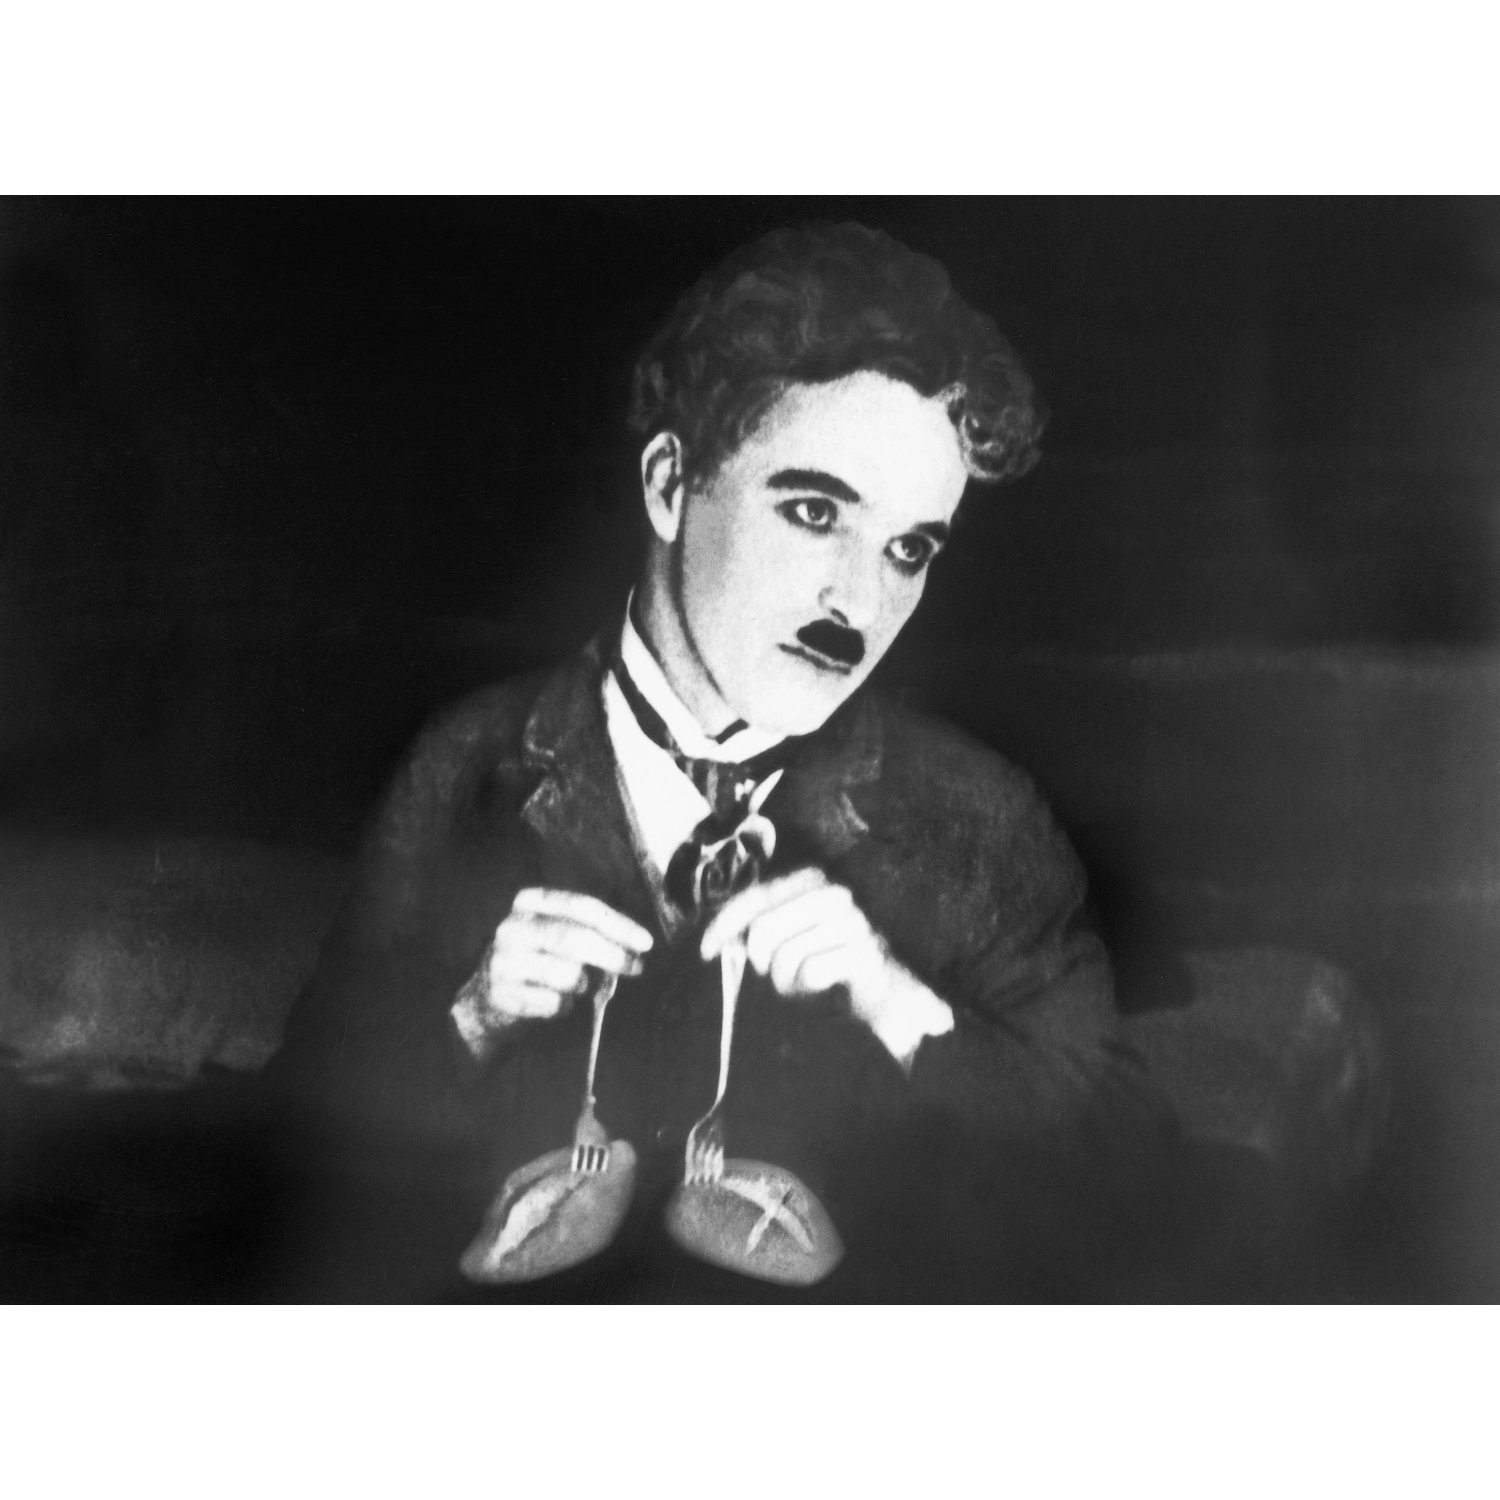 The Gold Rush, starring Charlie Chaplin, Georgia Hale, Mack Swain